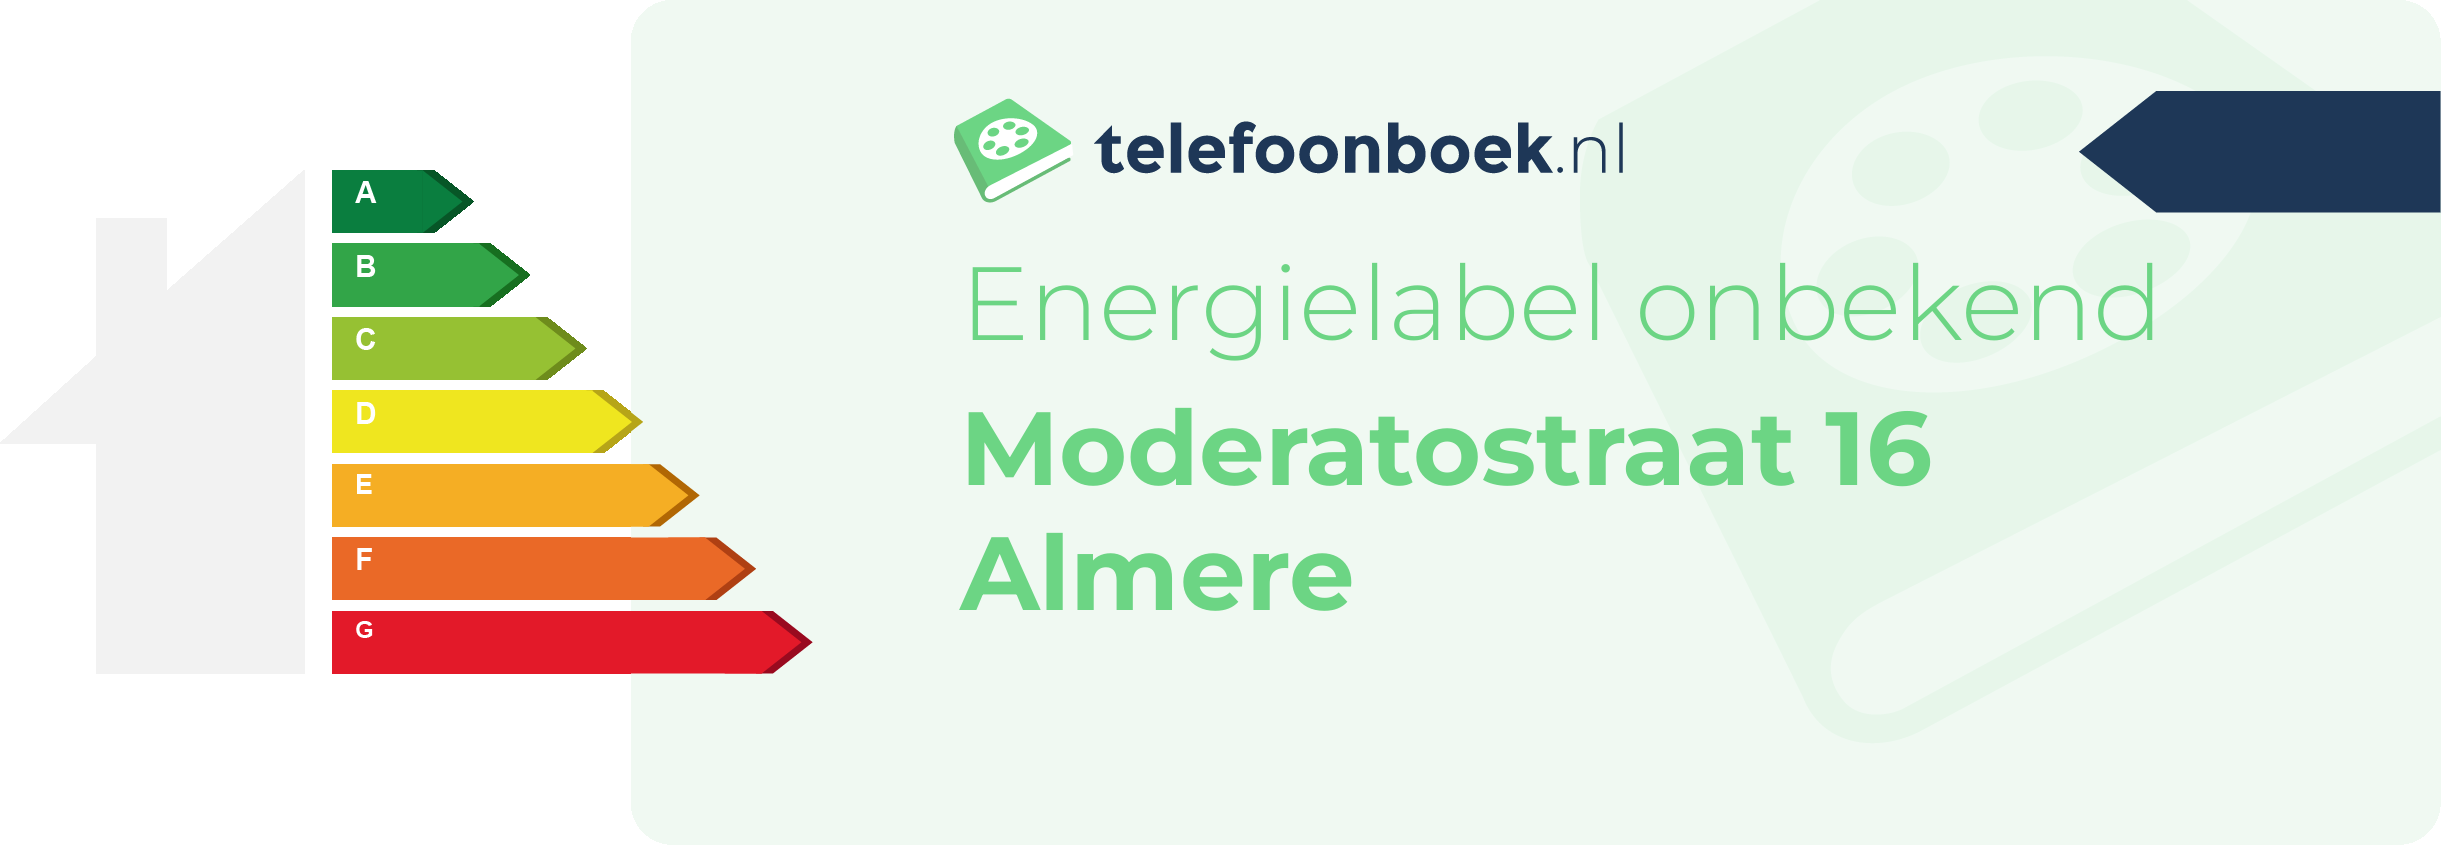 Energielabel Moderatostraat 16 Almere